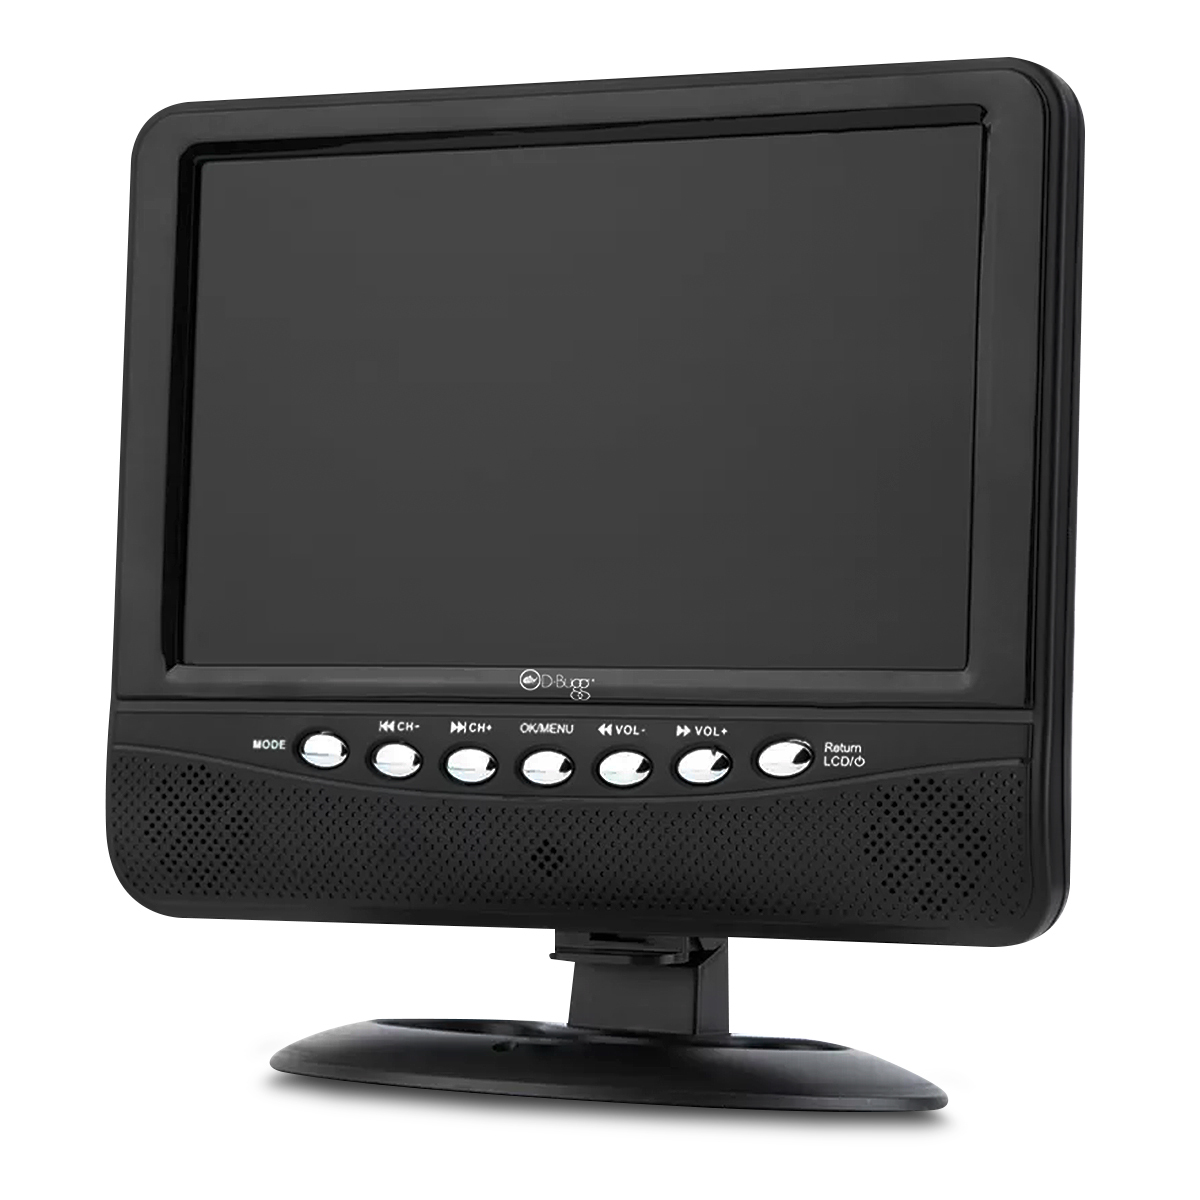 Monitor Pantalla Lcd 9 Tft Seguridad Video Camara Sd Auto Color Negro